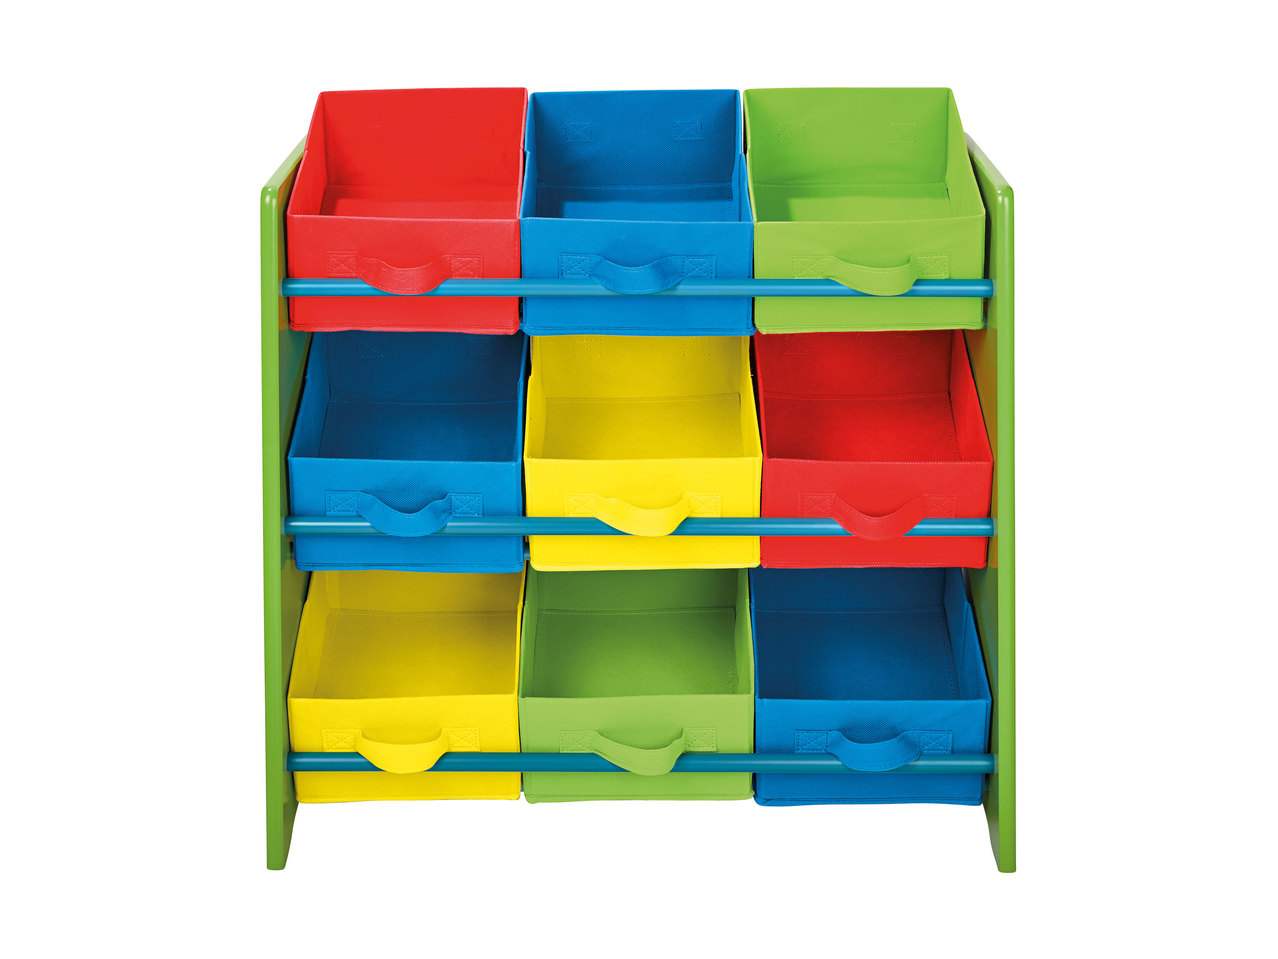 Livarno Living Kids' Storage Shelves1